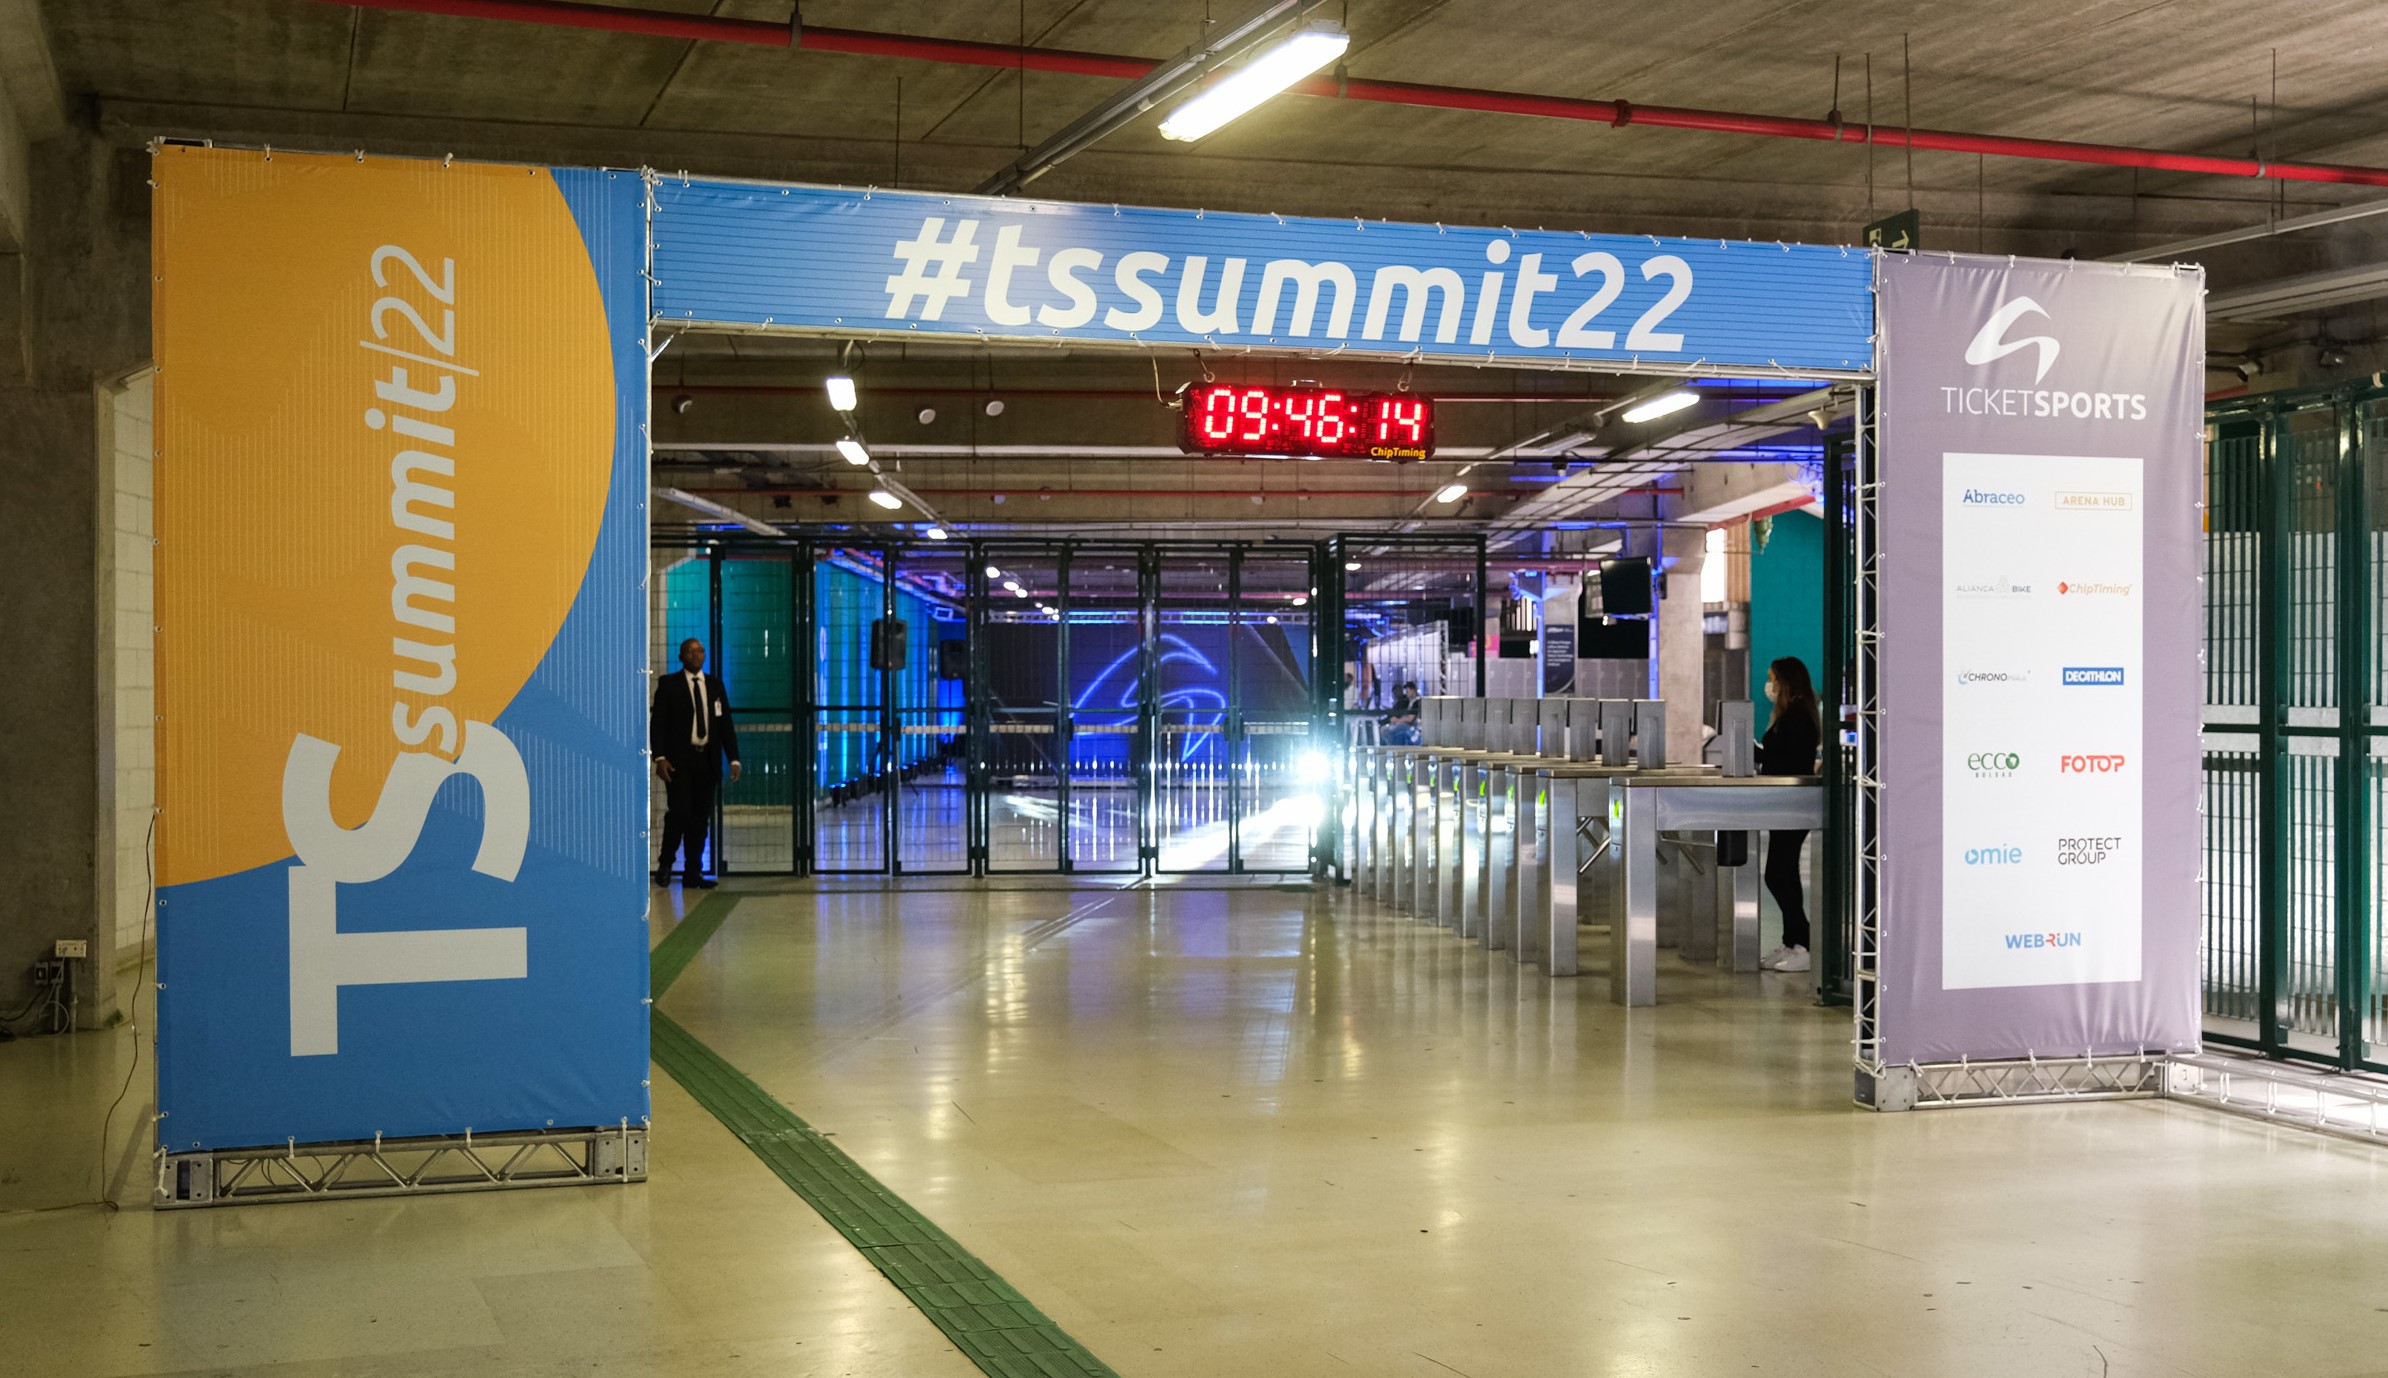 TS SUMMIT reúne 300 profissionais no Allianz Parque para debater mercado esportivo